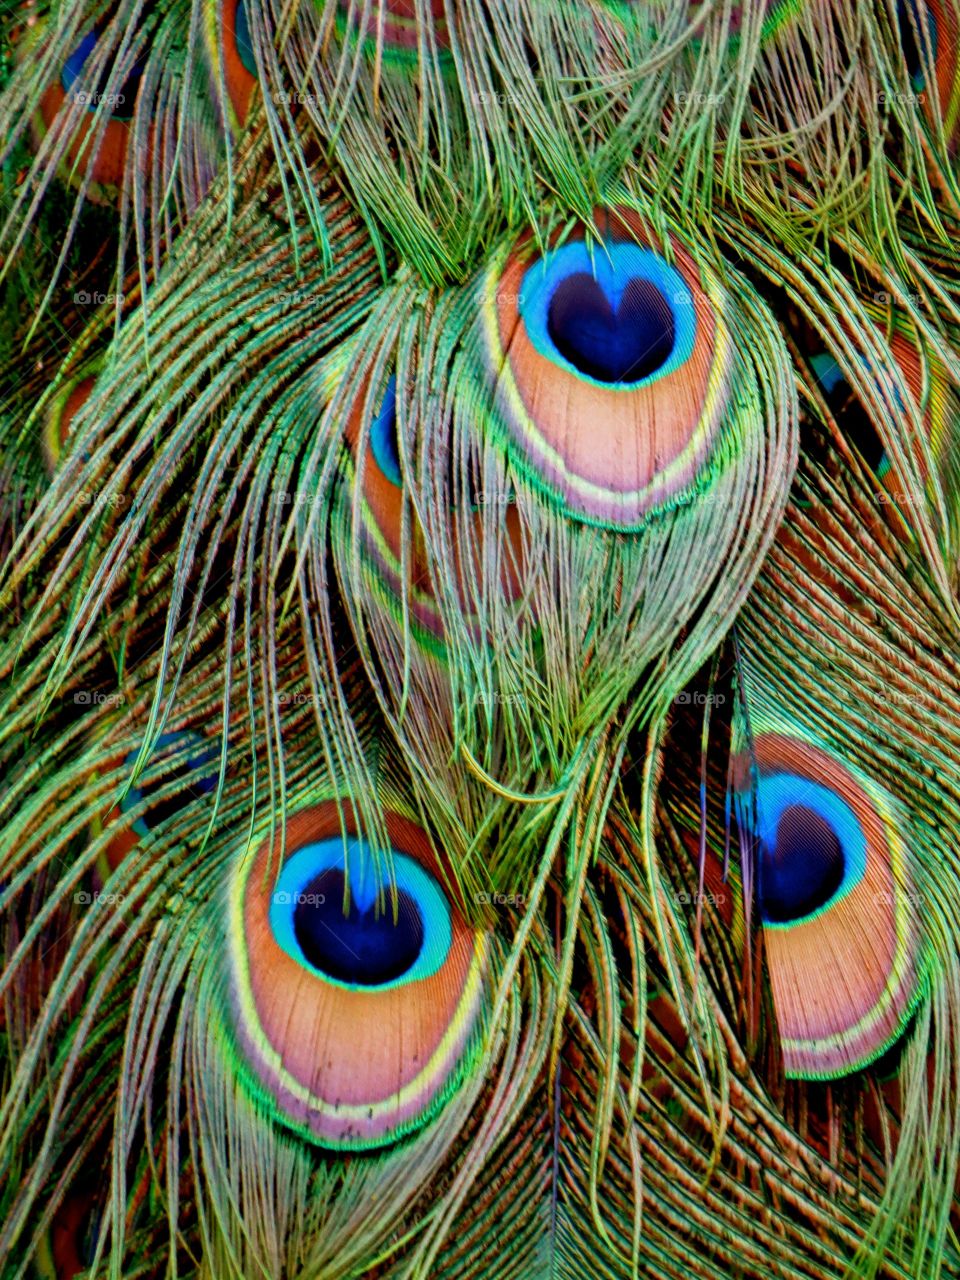 5/19/13 close-up peacock feathers. Peacocks roaming Makaha